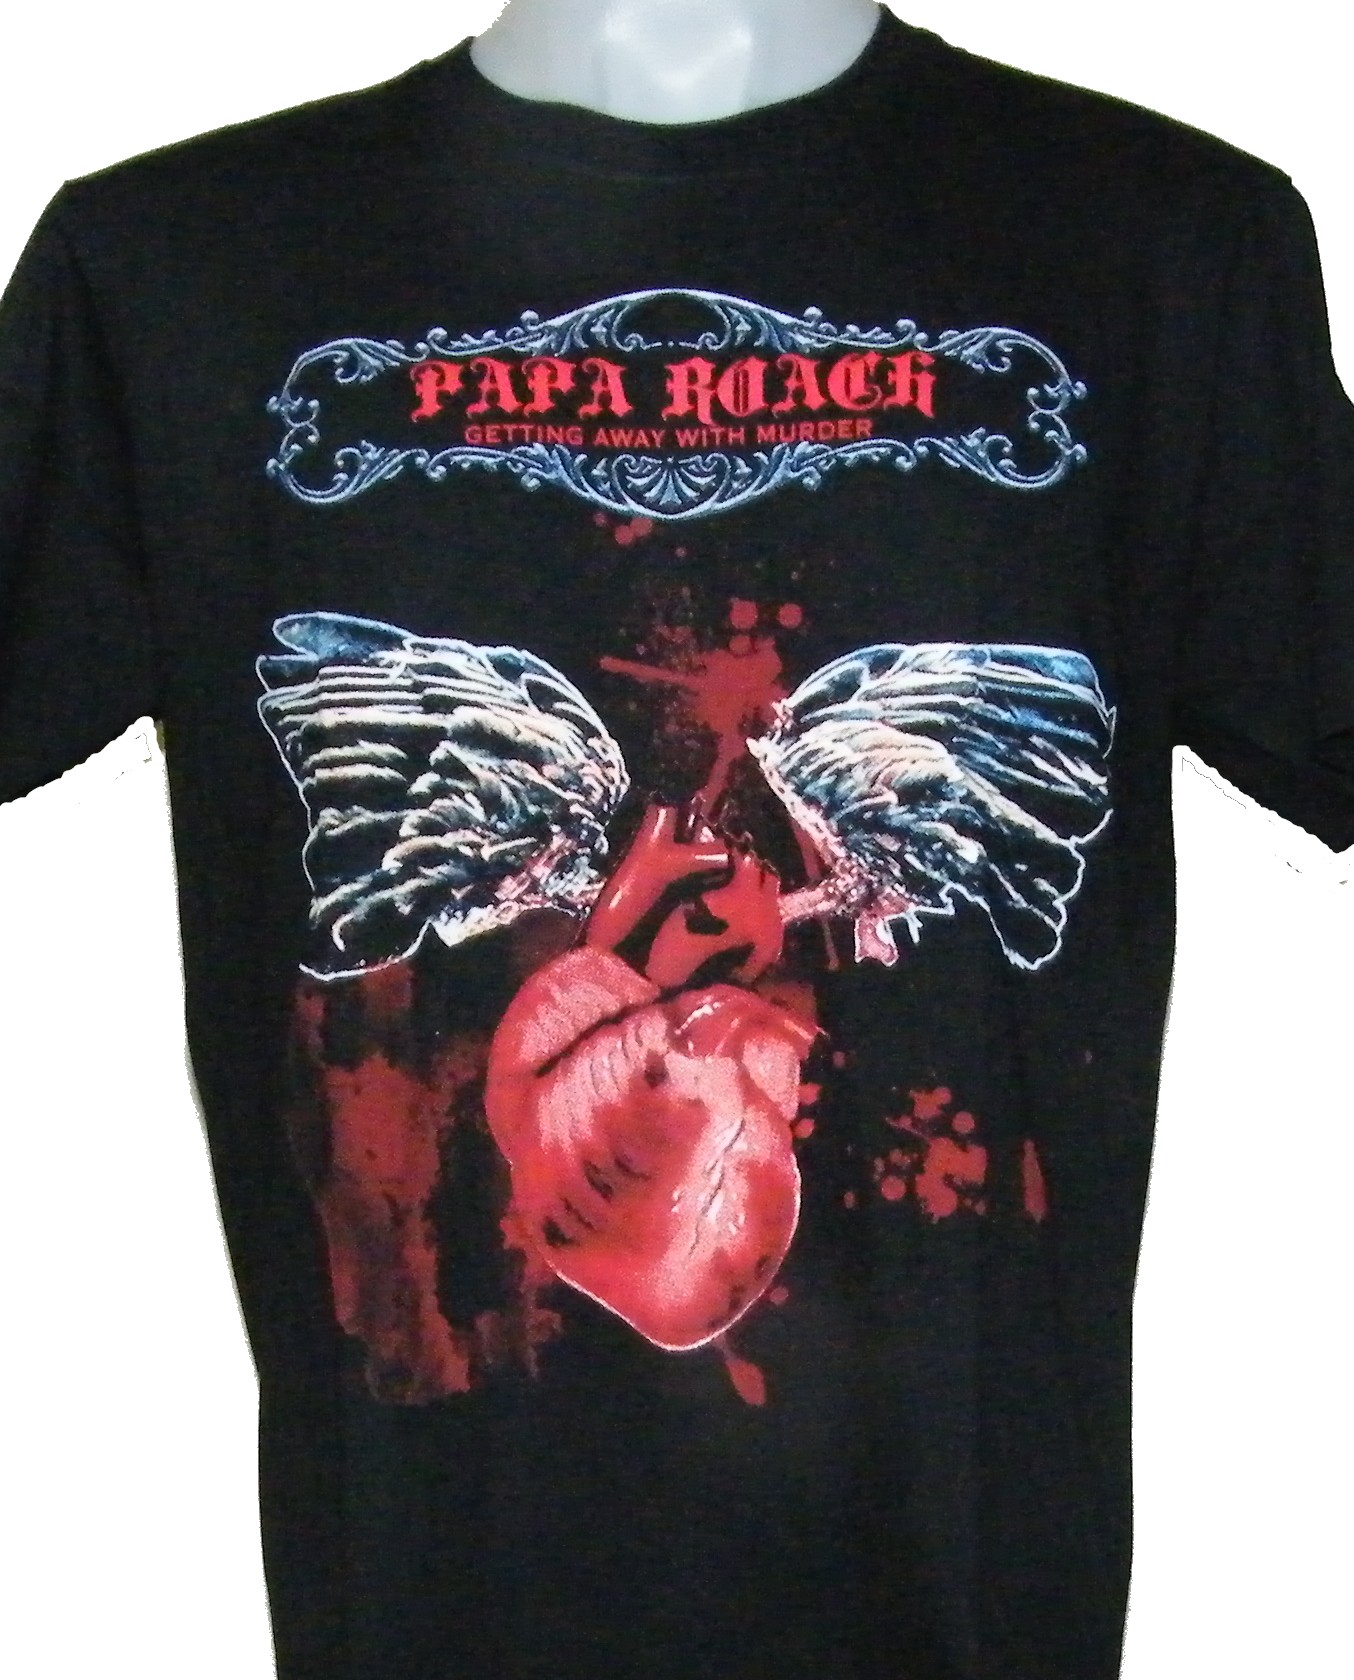 Papa Roach T Shirt Getting Away With Murder Size L Roxxbkk